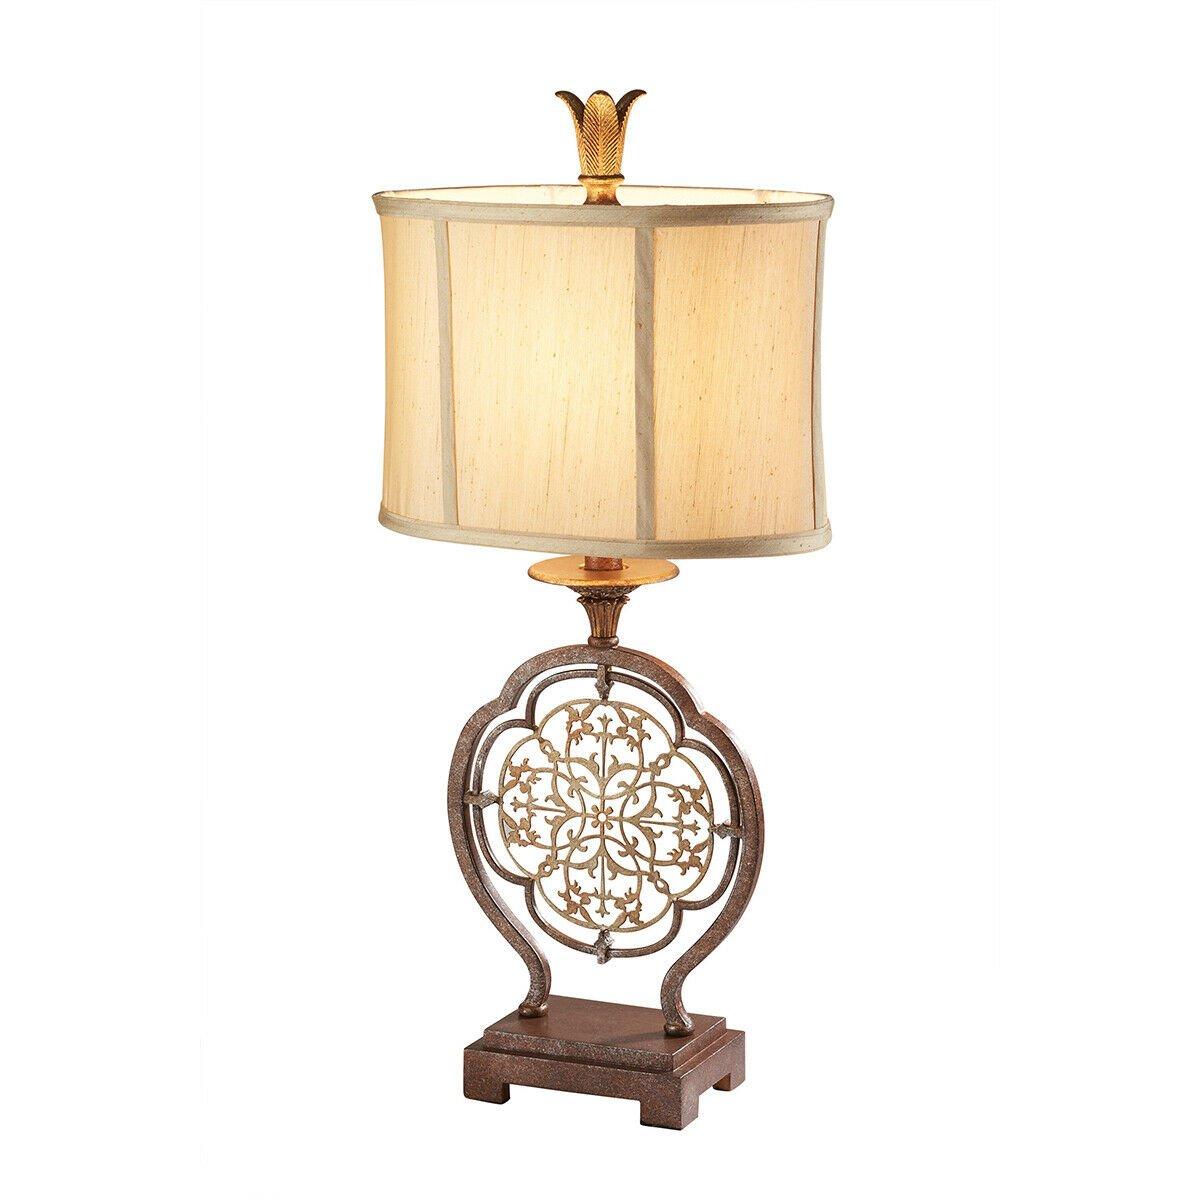 Table Lamp British Bronze Oxidized Bronze LED E27 60W Bulb